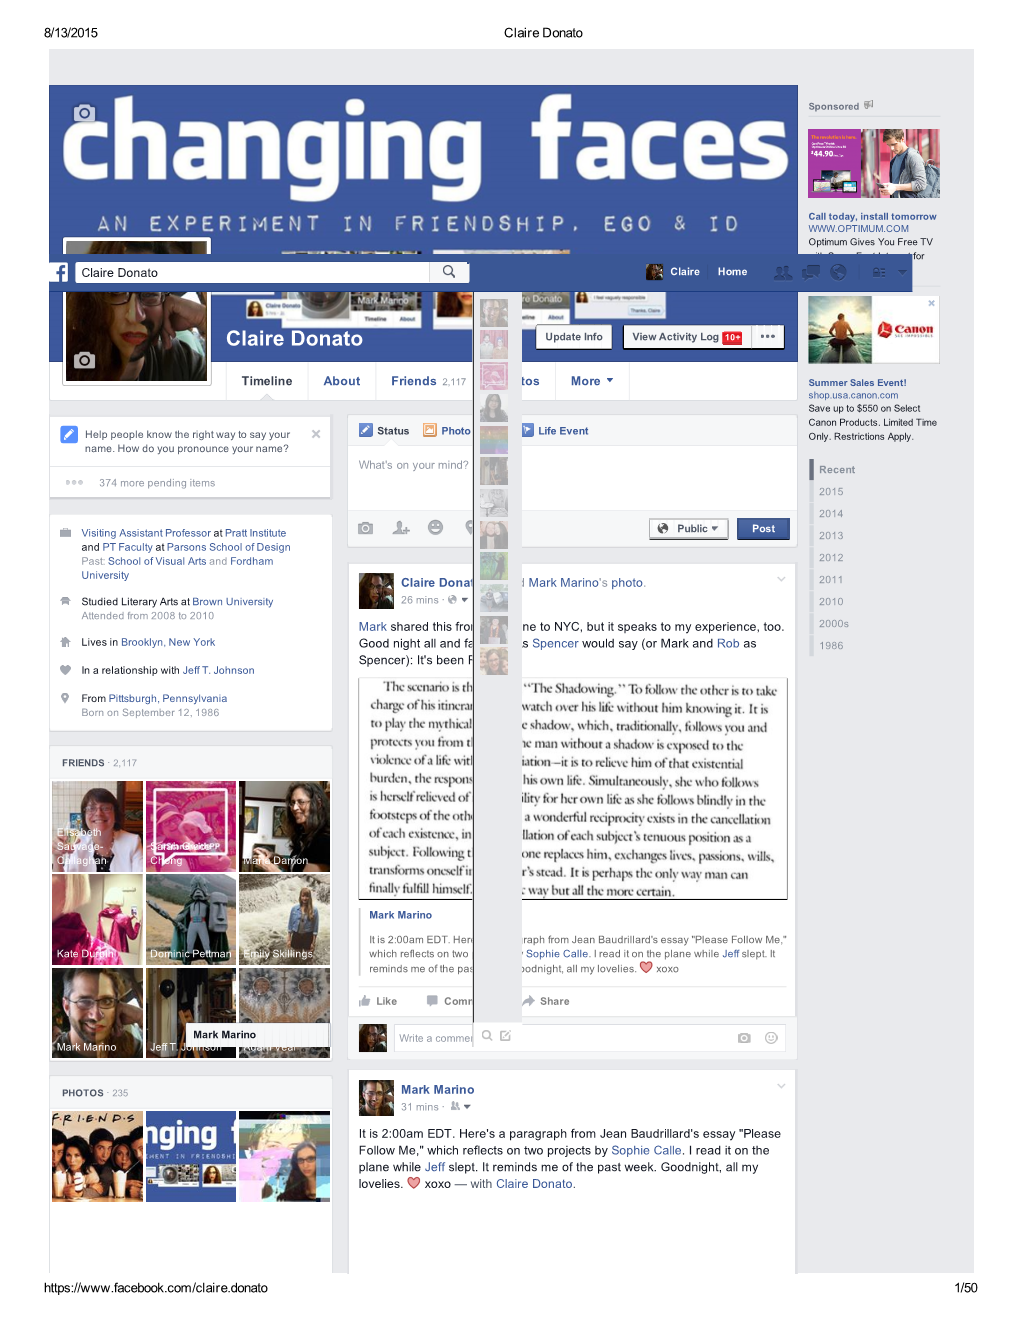 Claire Donato FB Full Changing Facs